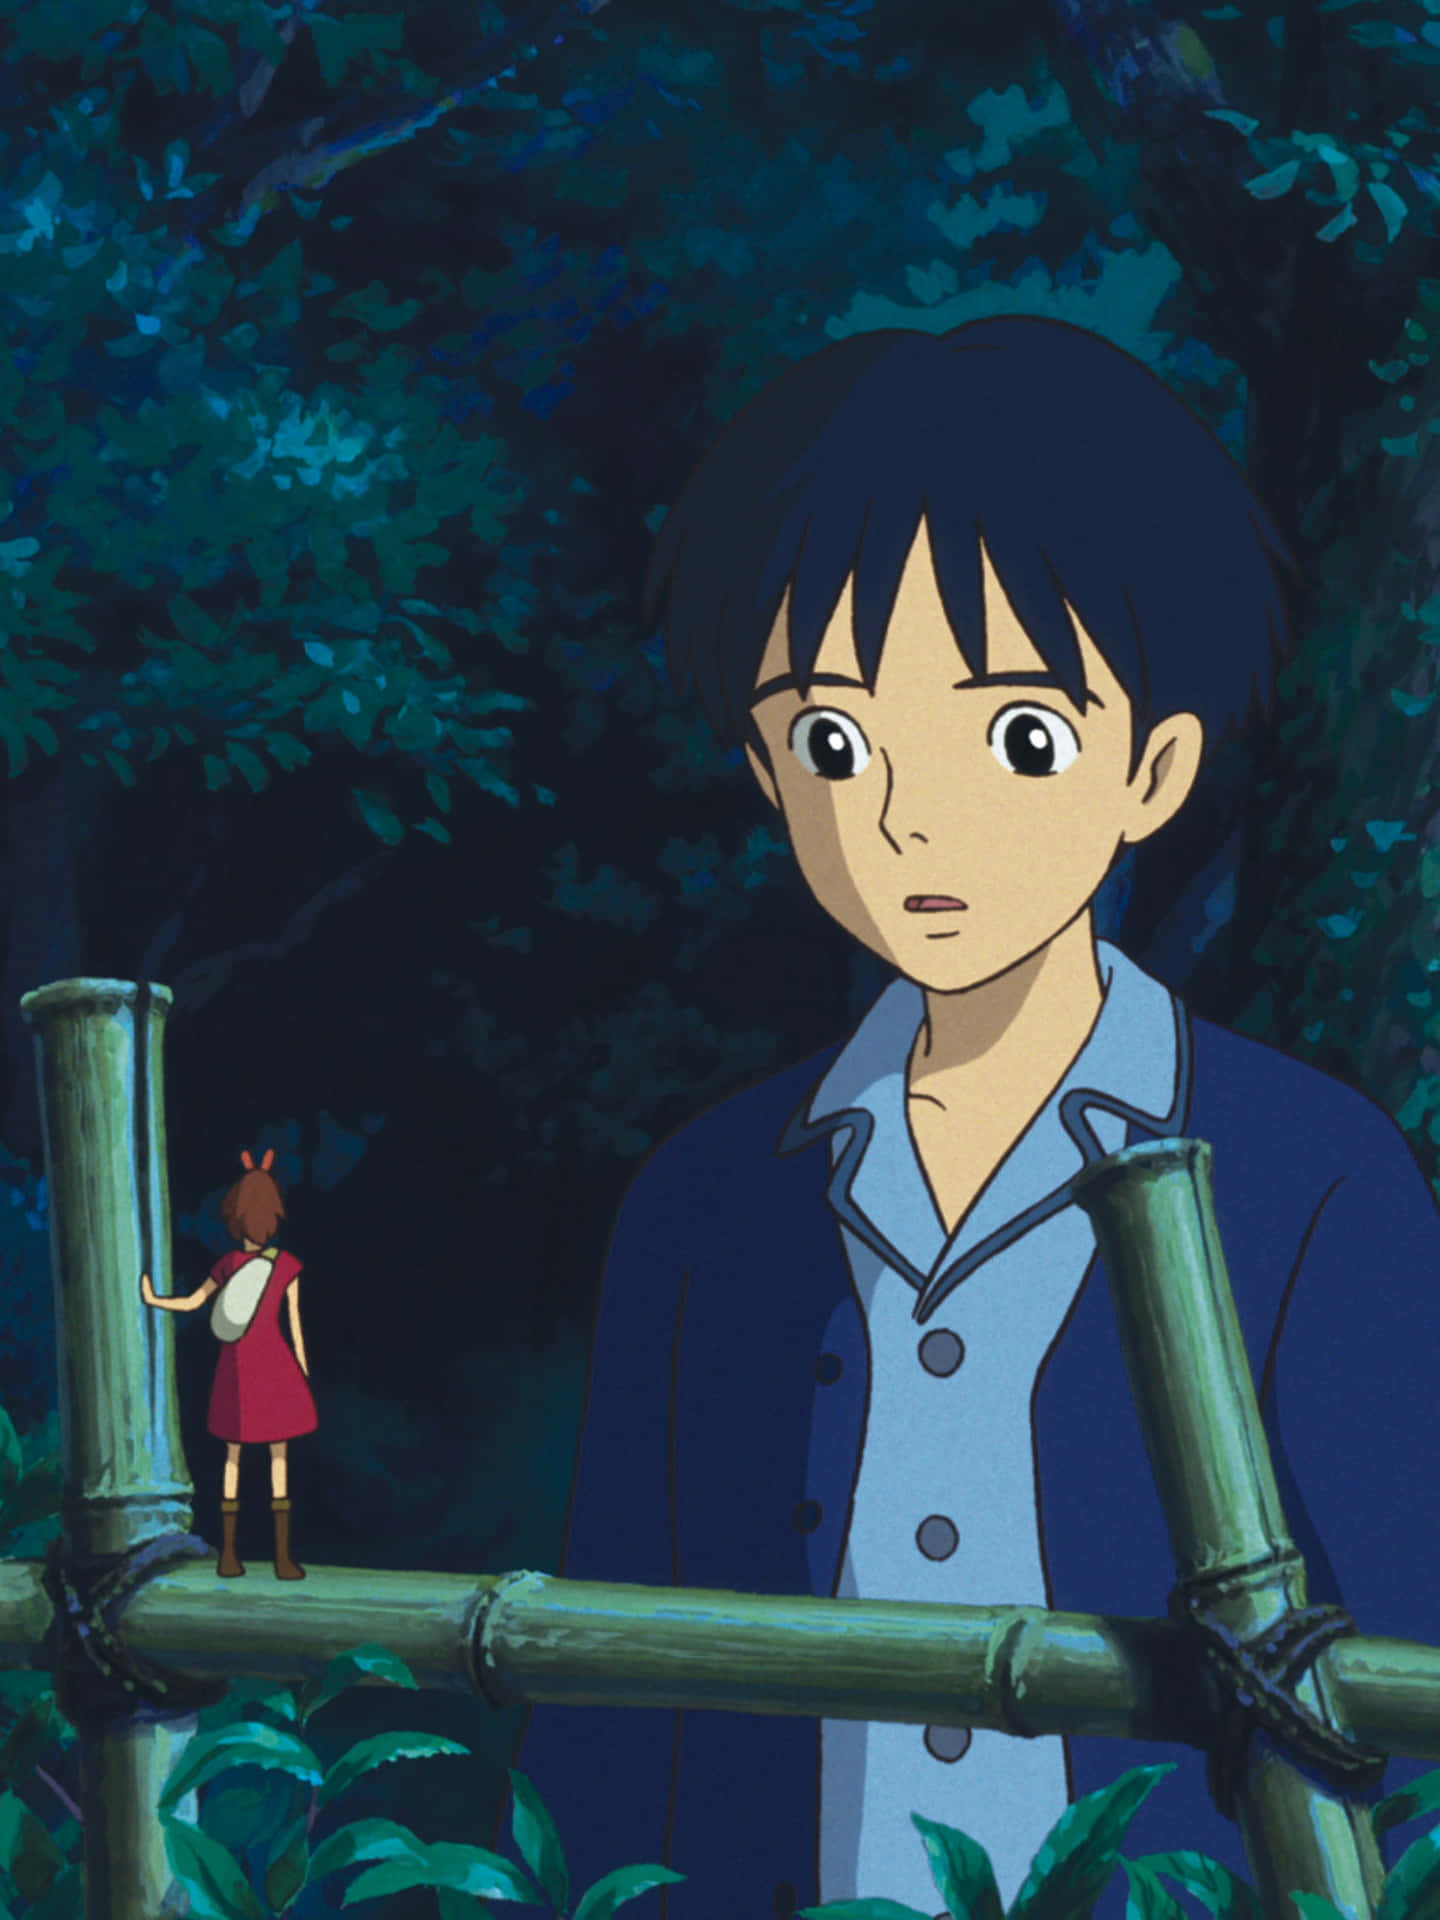 JETwitcom  Ghiblis 借りぐらしのアリエッティ aka The Secret World of Arrietty  being released in US Feb 2012